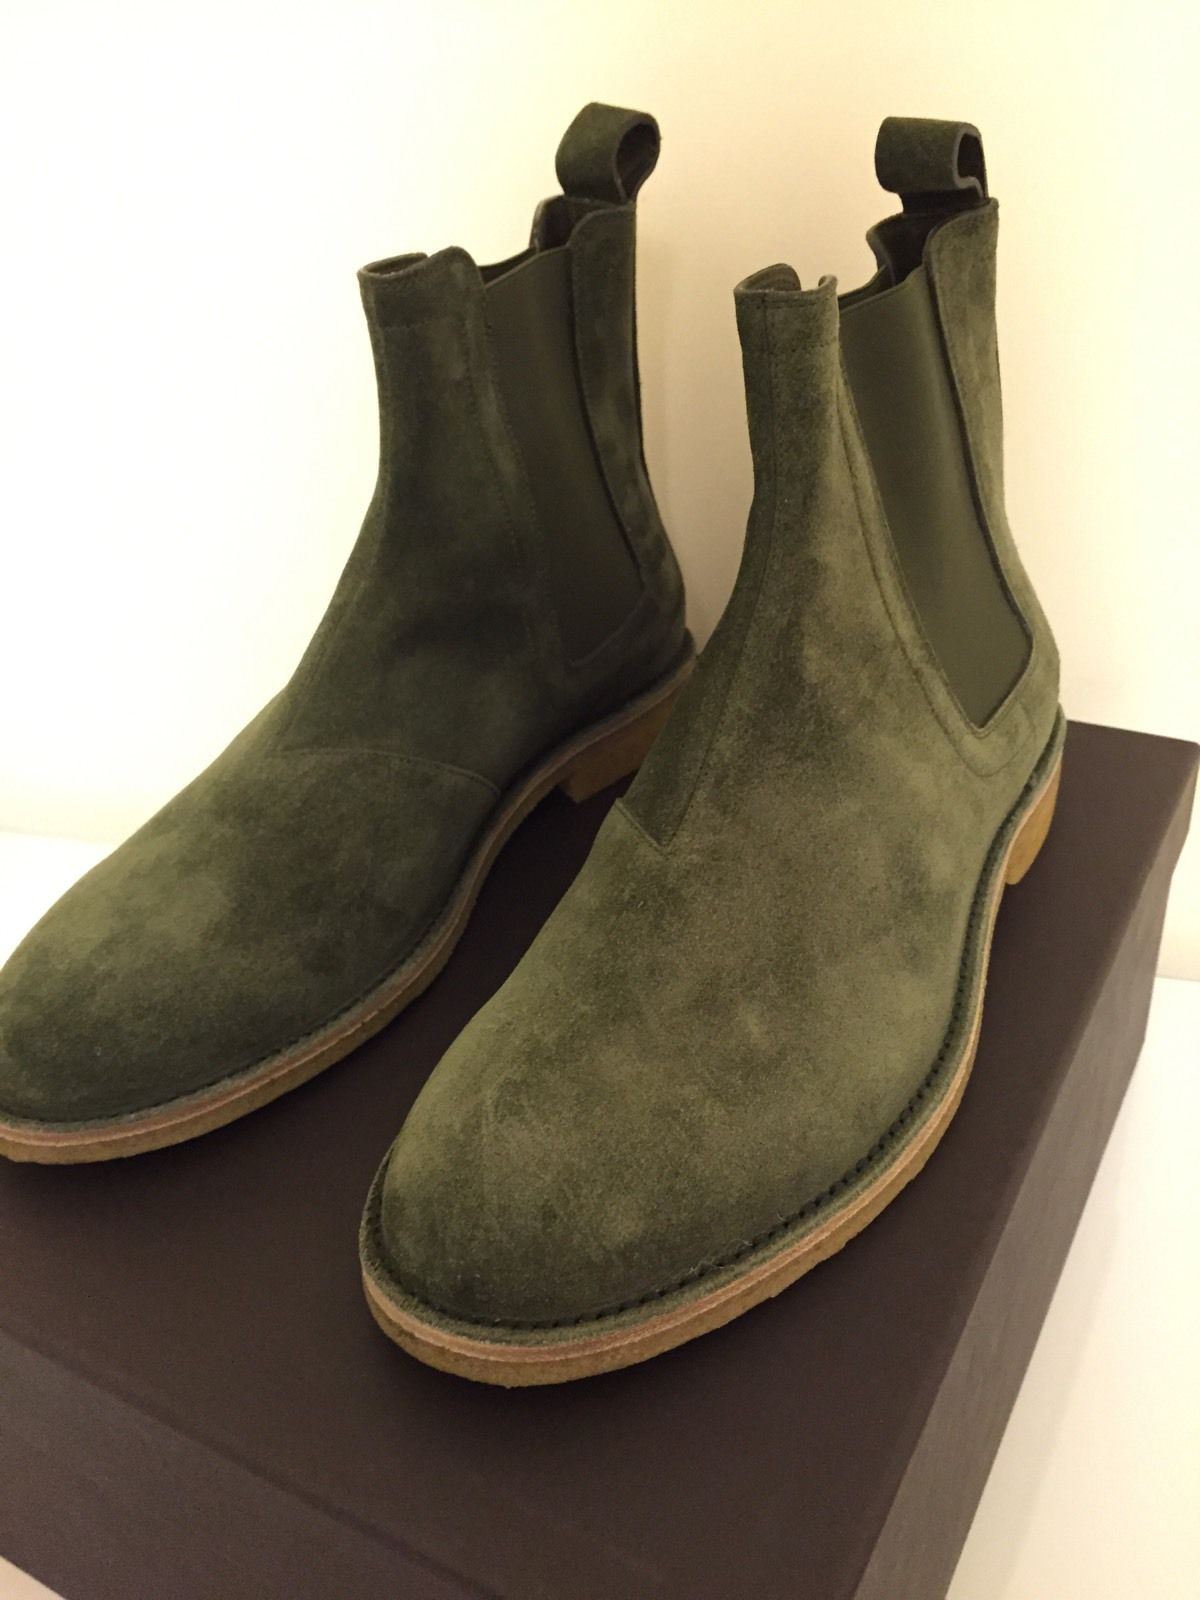 mens green chelsea boots